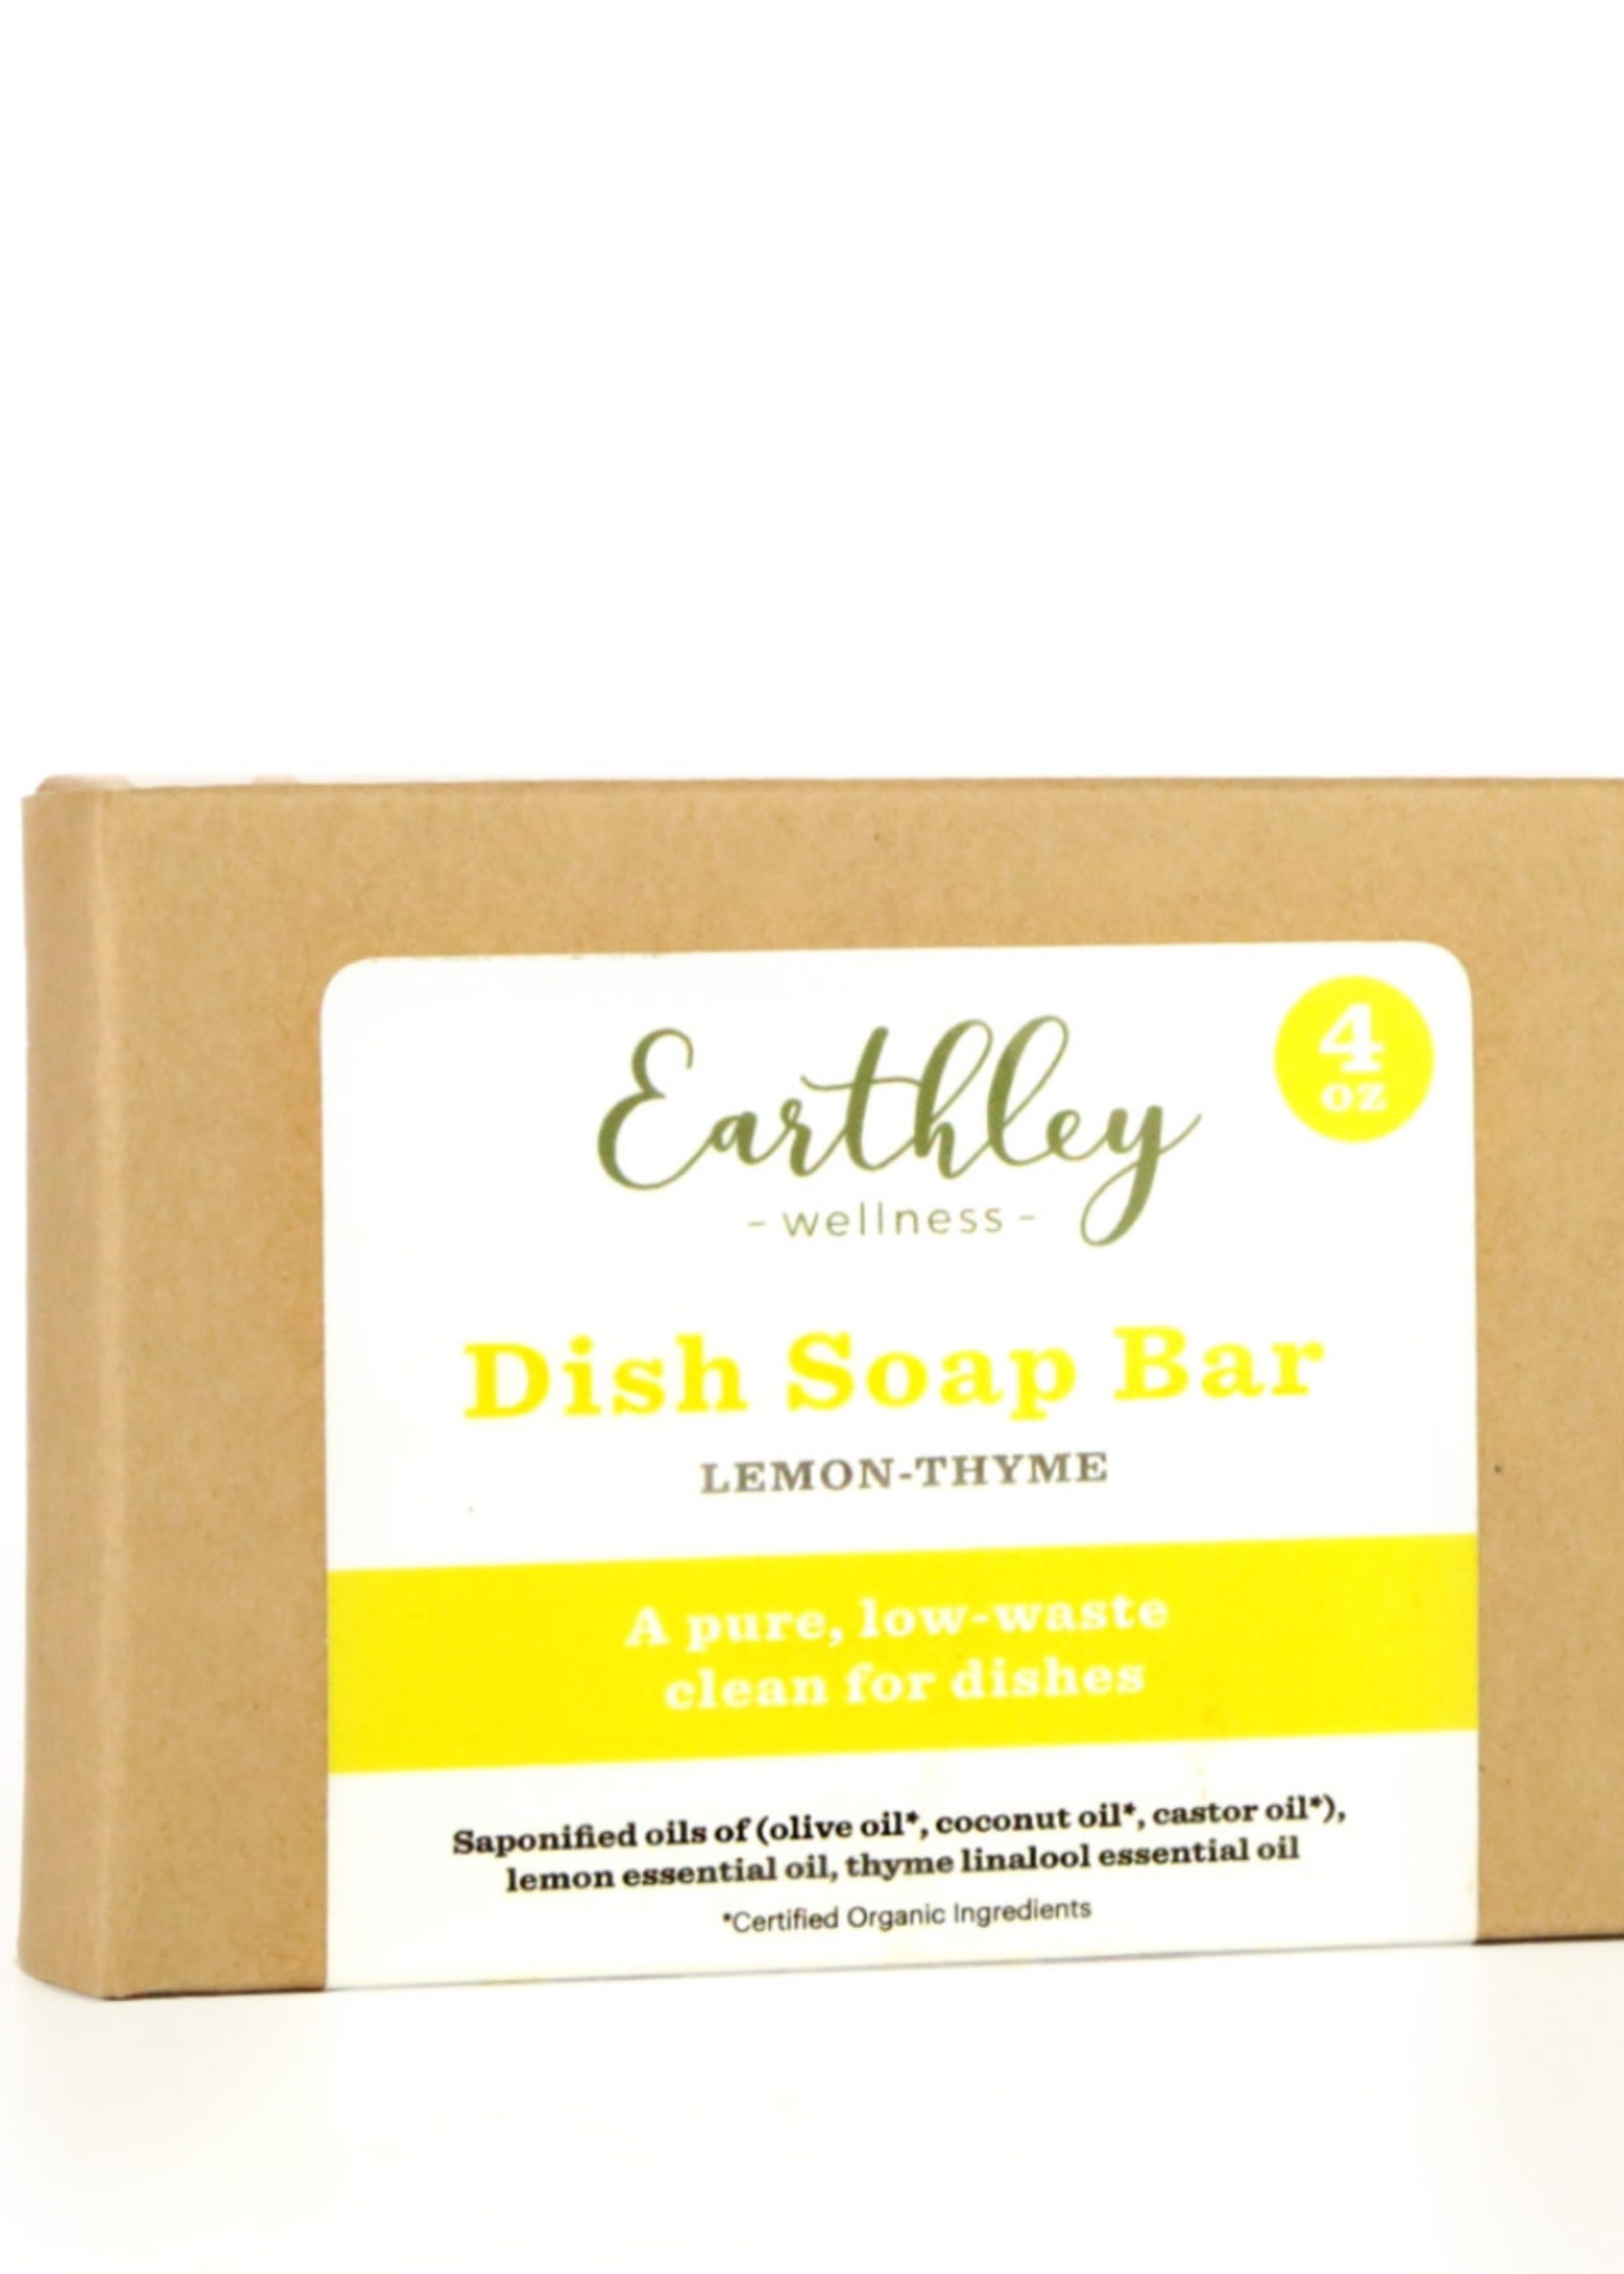 Dish Soap Bar  Earthley Wellness